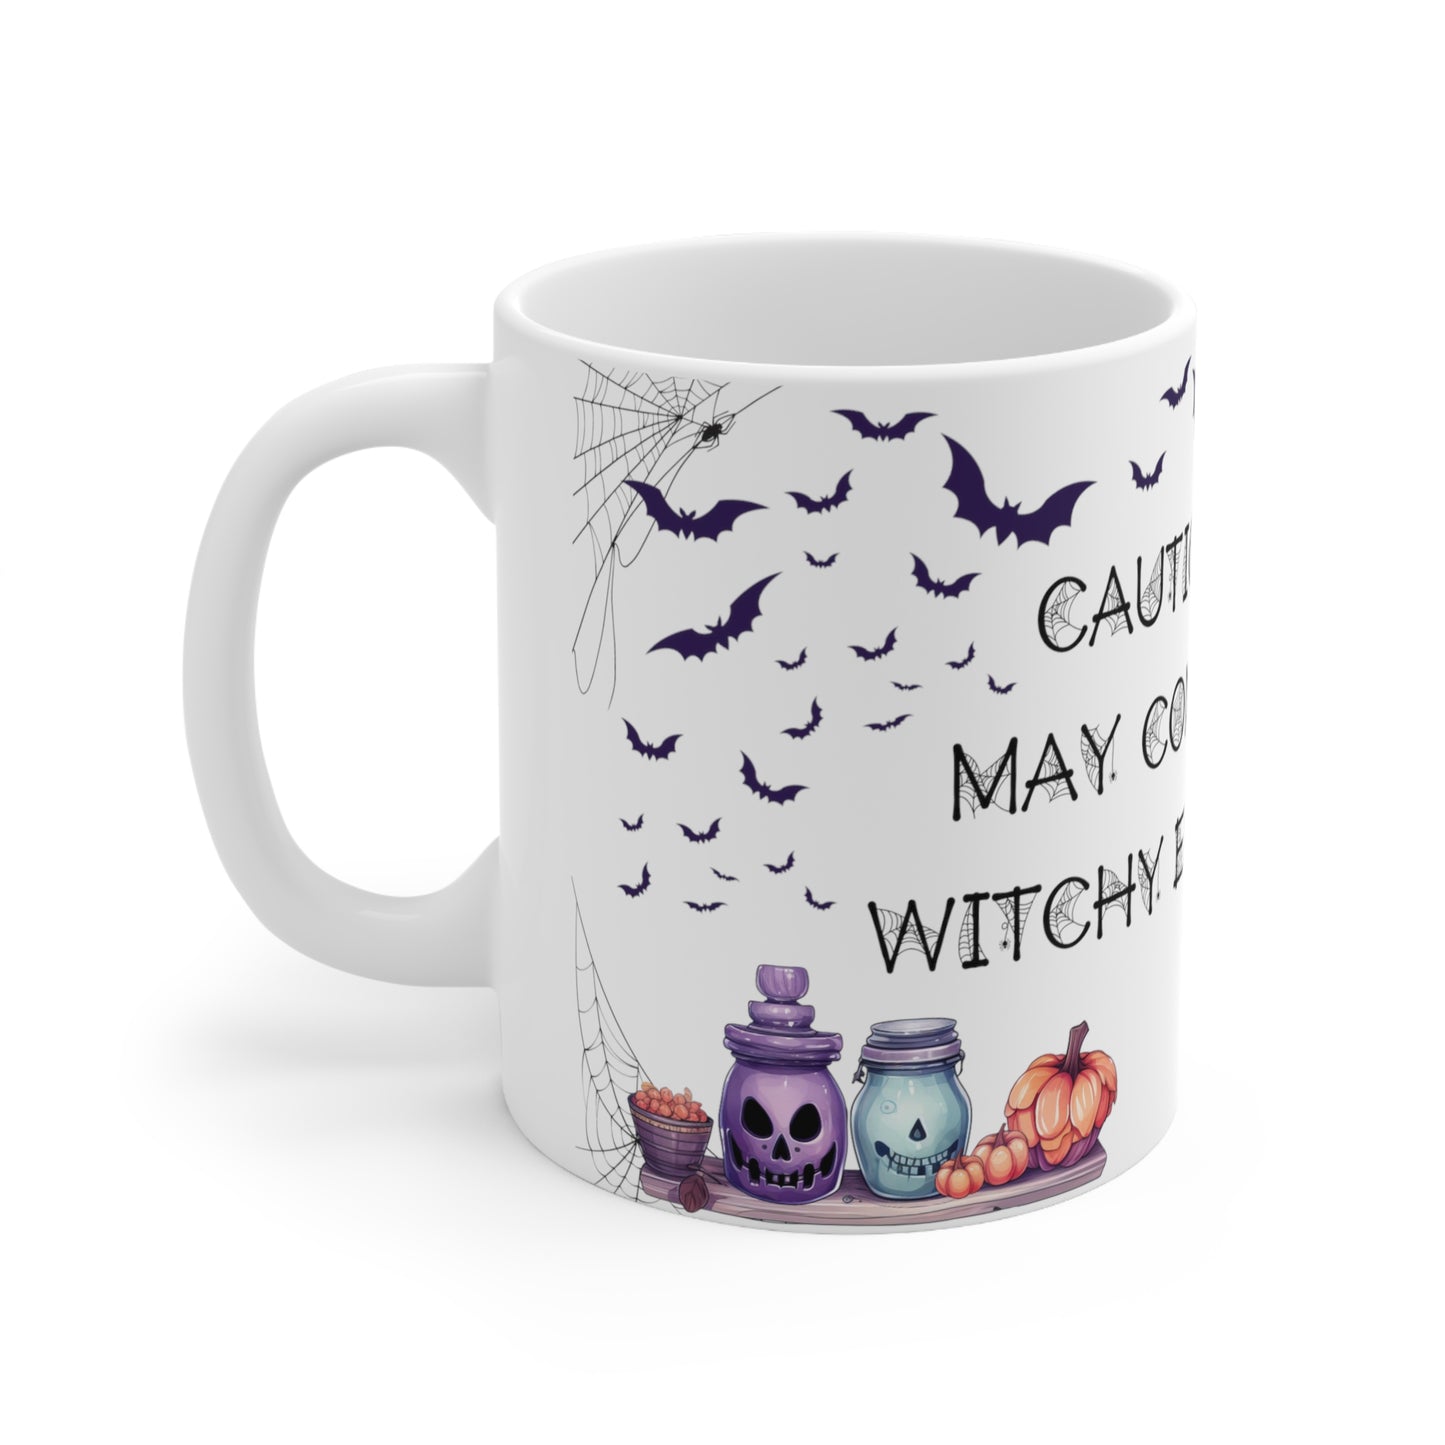 Retro Halloween Coffee Mug Funny Coffee Mug Witchy Mug Halloween Cauldron Mug Halloween Spider Web Mug Halloween Bat Mug Halloween Kitchen